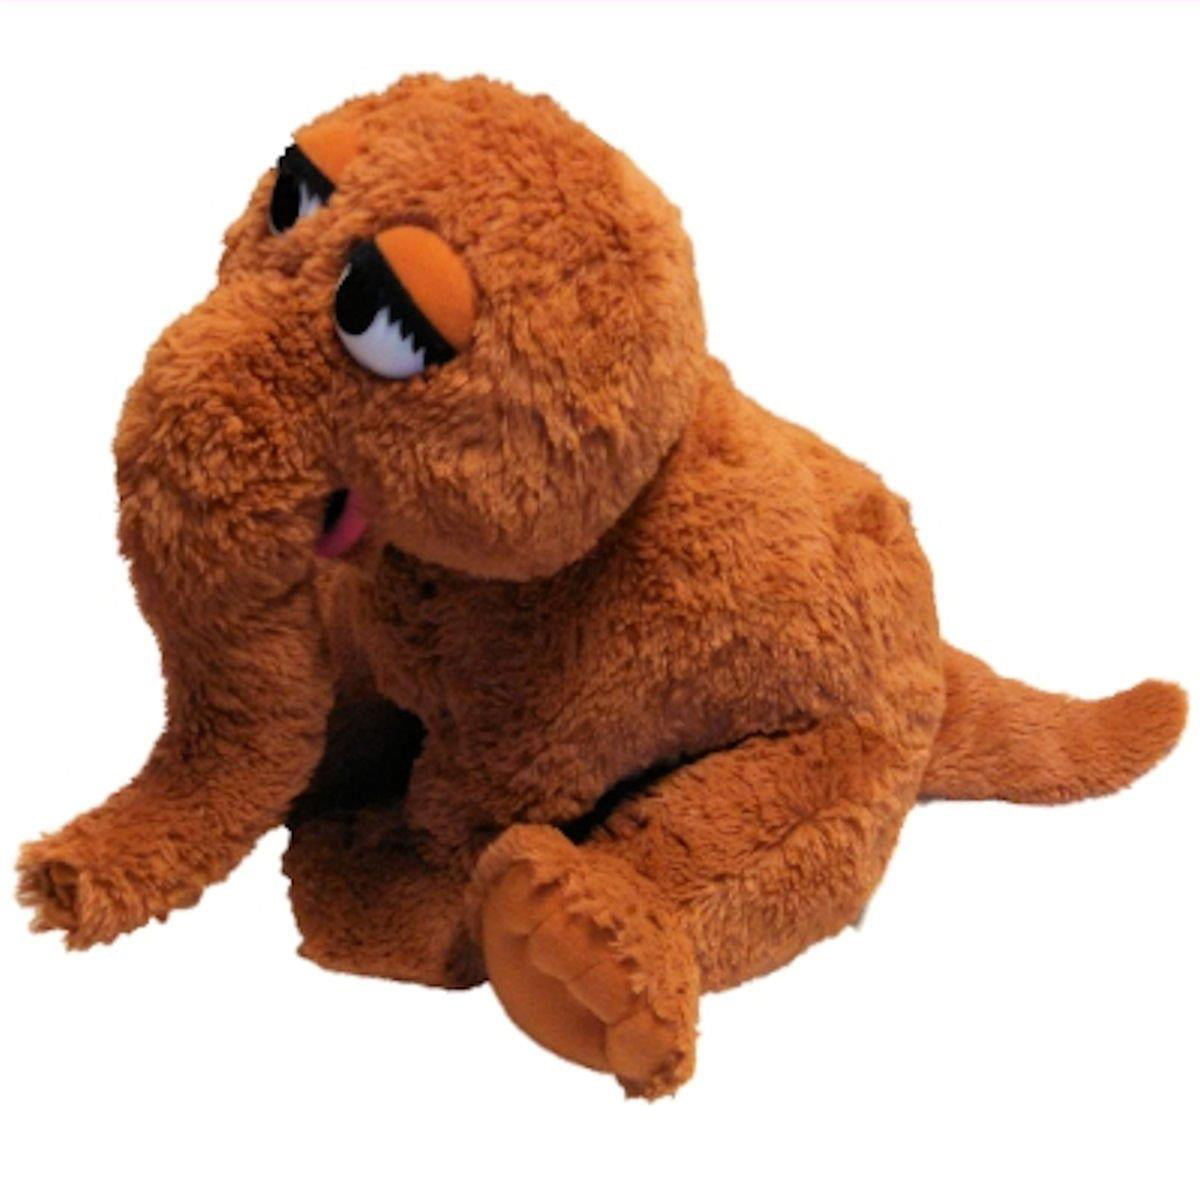 snuffleupagus stuffed animal